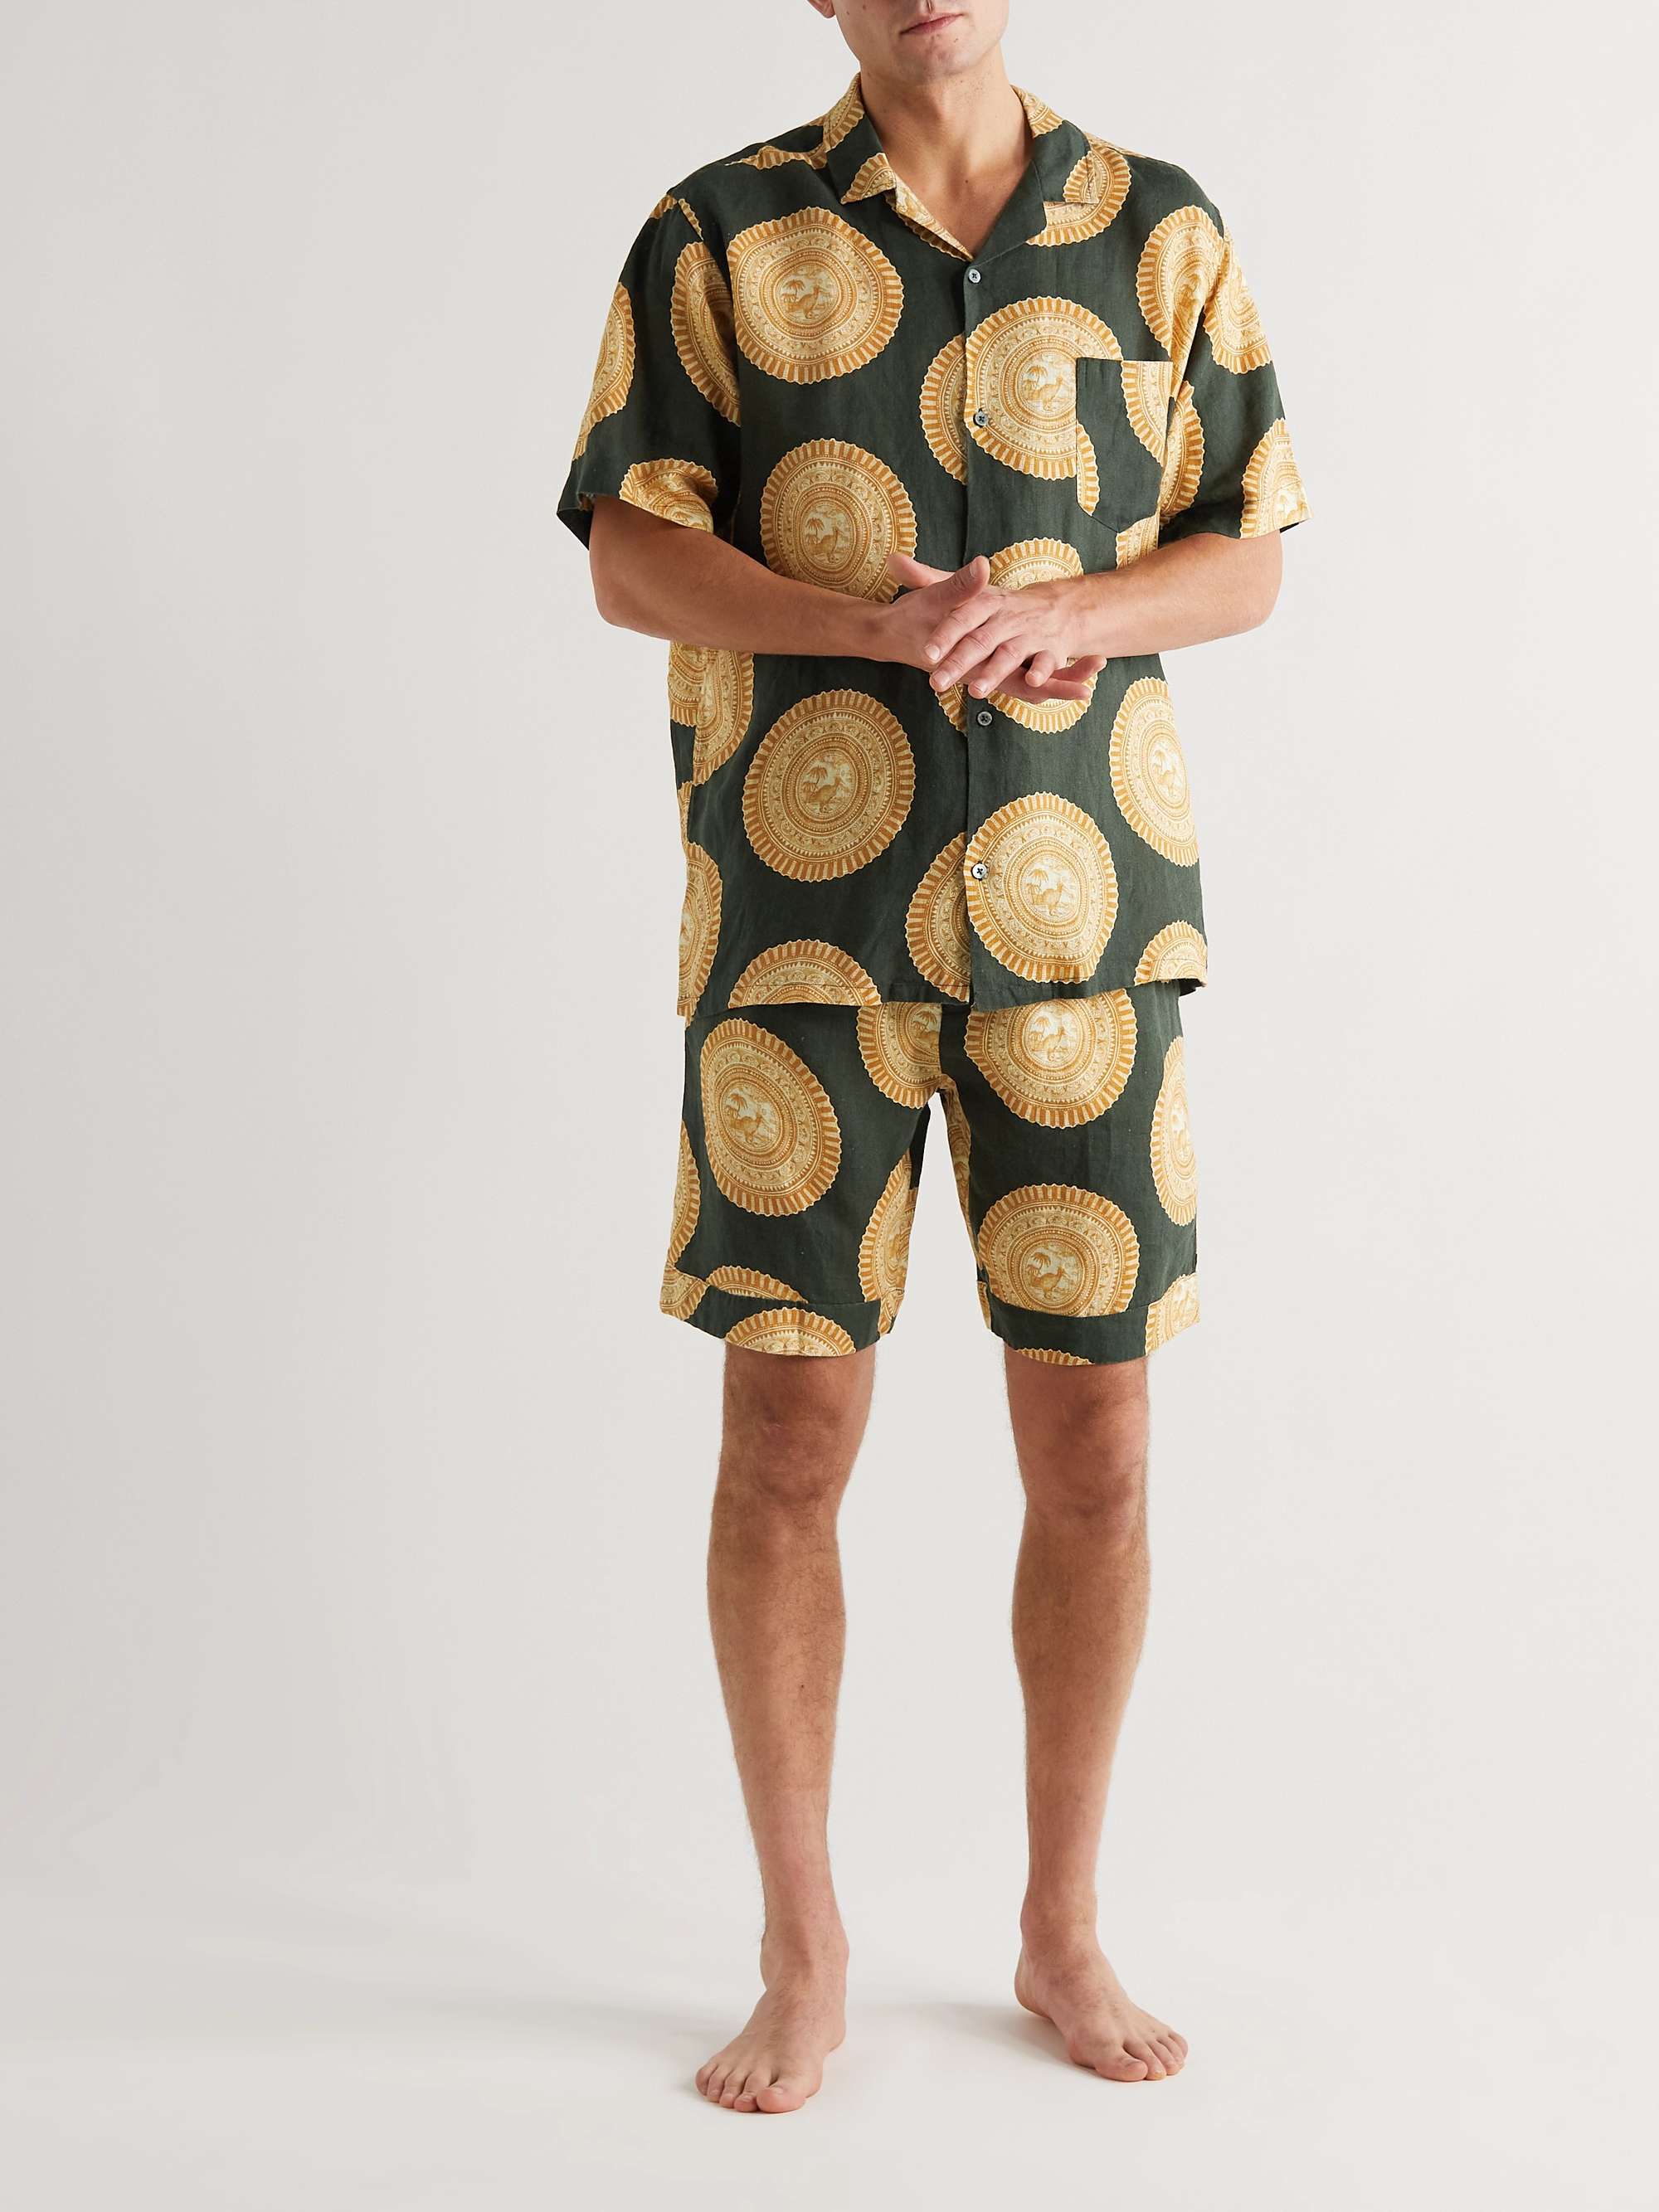 DESMOND & DEMPSEY Printed Linen Pyjama Set